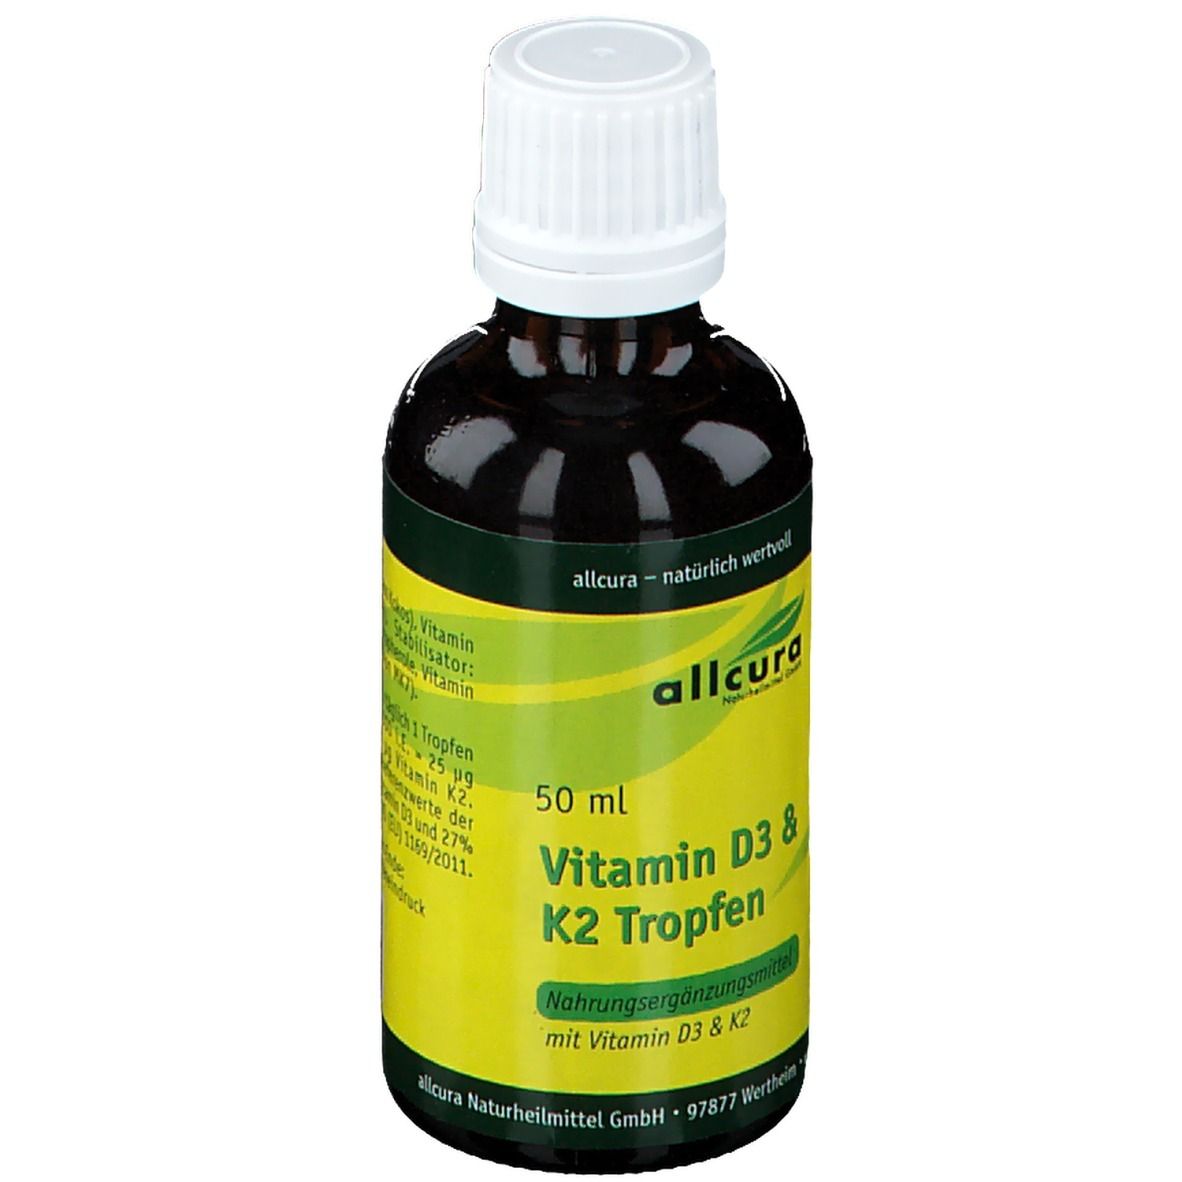 allcura Vitamin D3 + K2 Tropfen